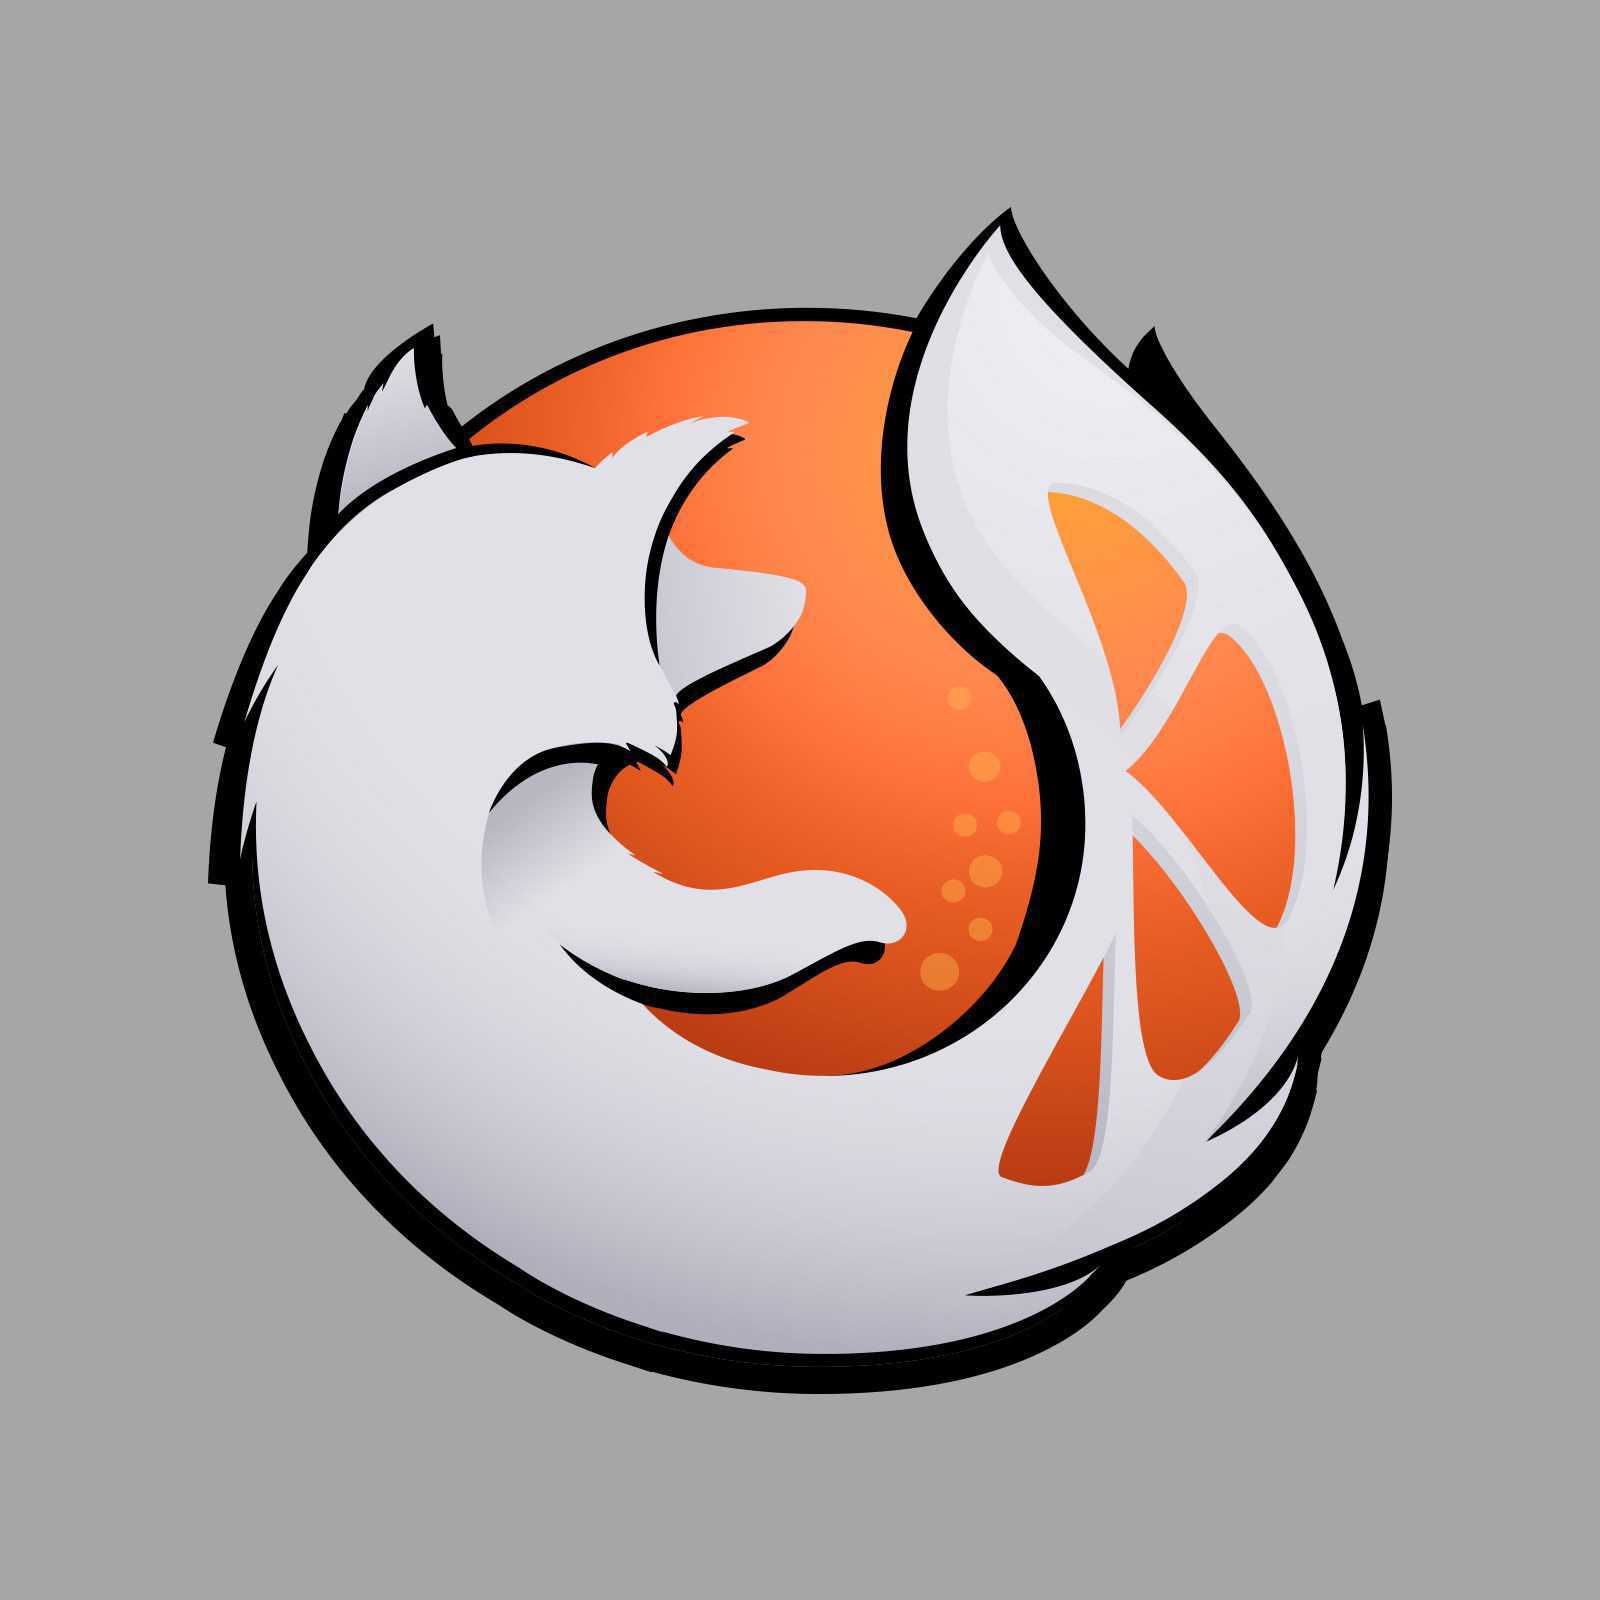 Firefox logo blended with silverorange logo